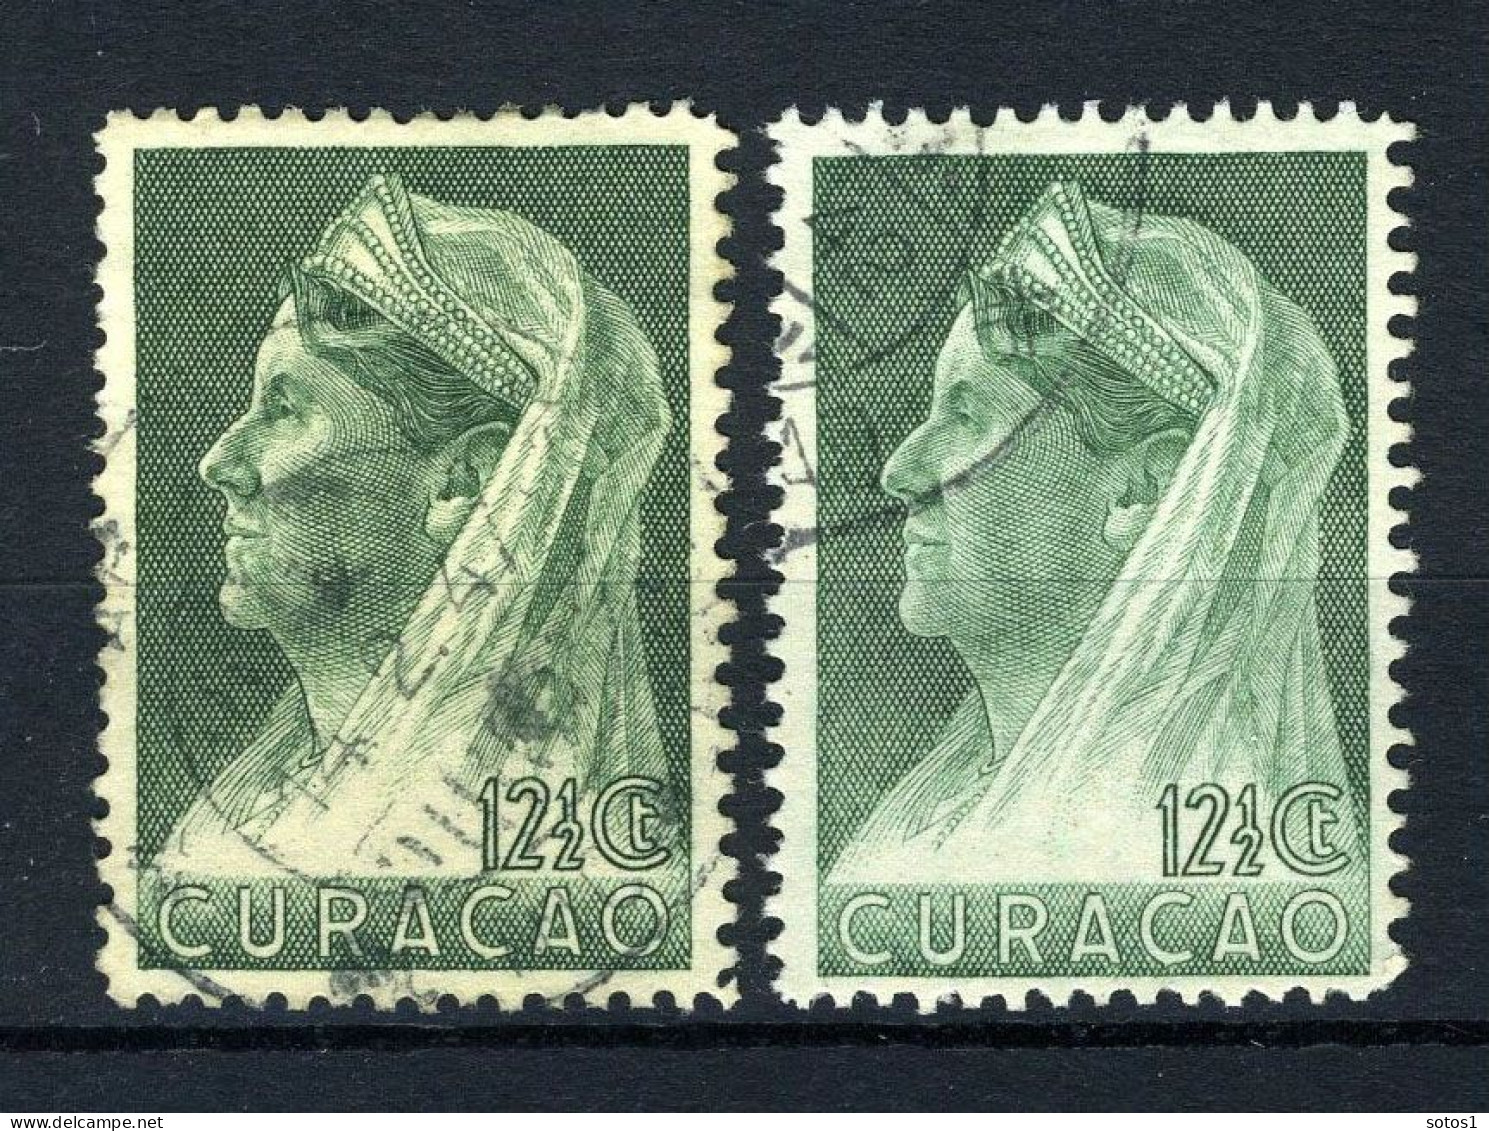 CURACAO 128 Gestempeld 1936 - Koningin Wilhelmina Met Sluier - Curacao, Netherlands Antilles, Aruba